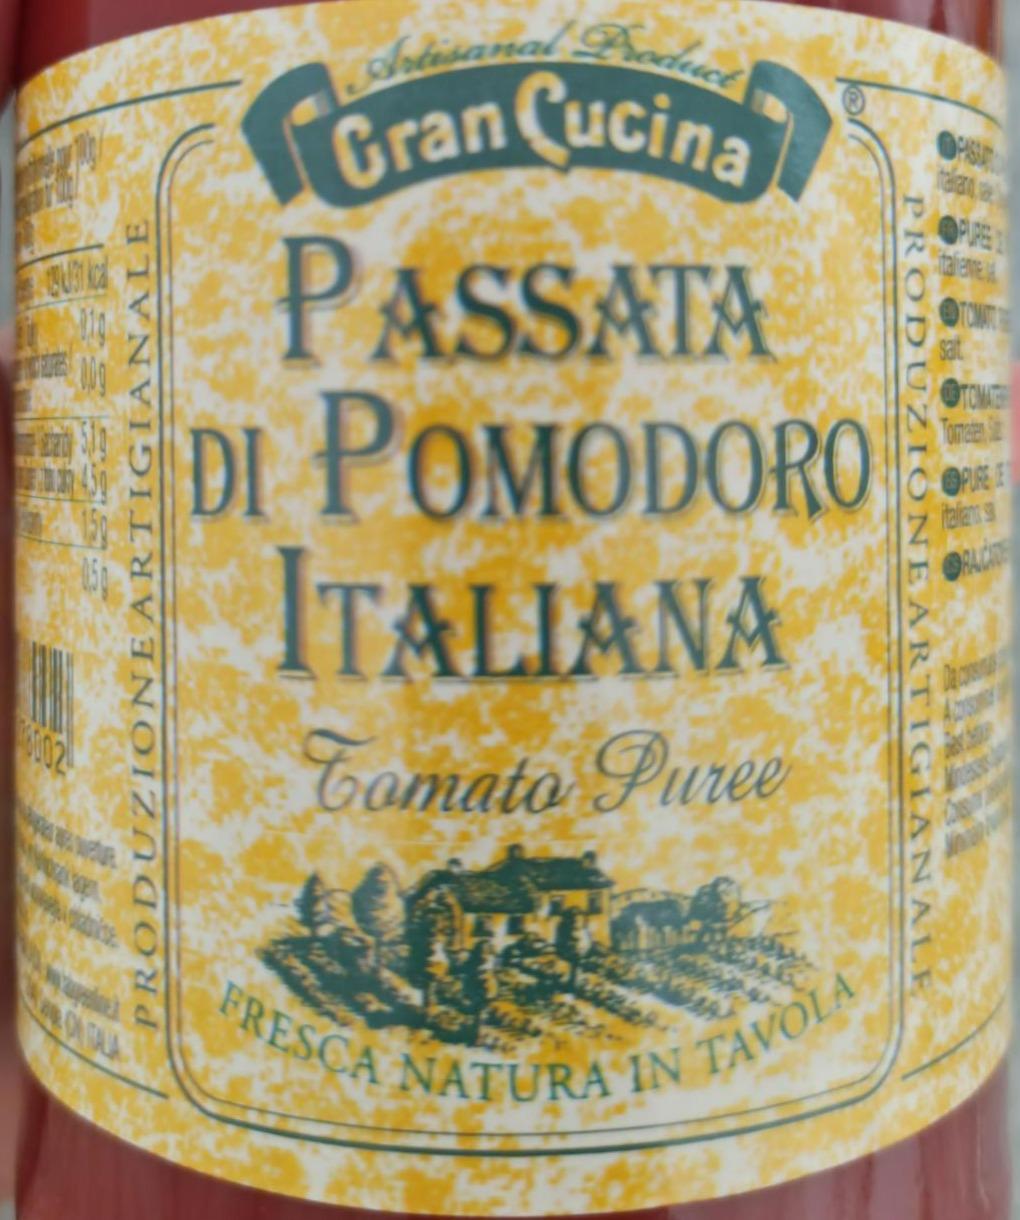 Fotografie - Passata di pomodoro italiana Gran Cucina